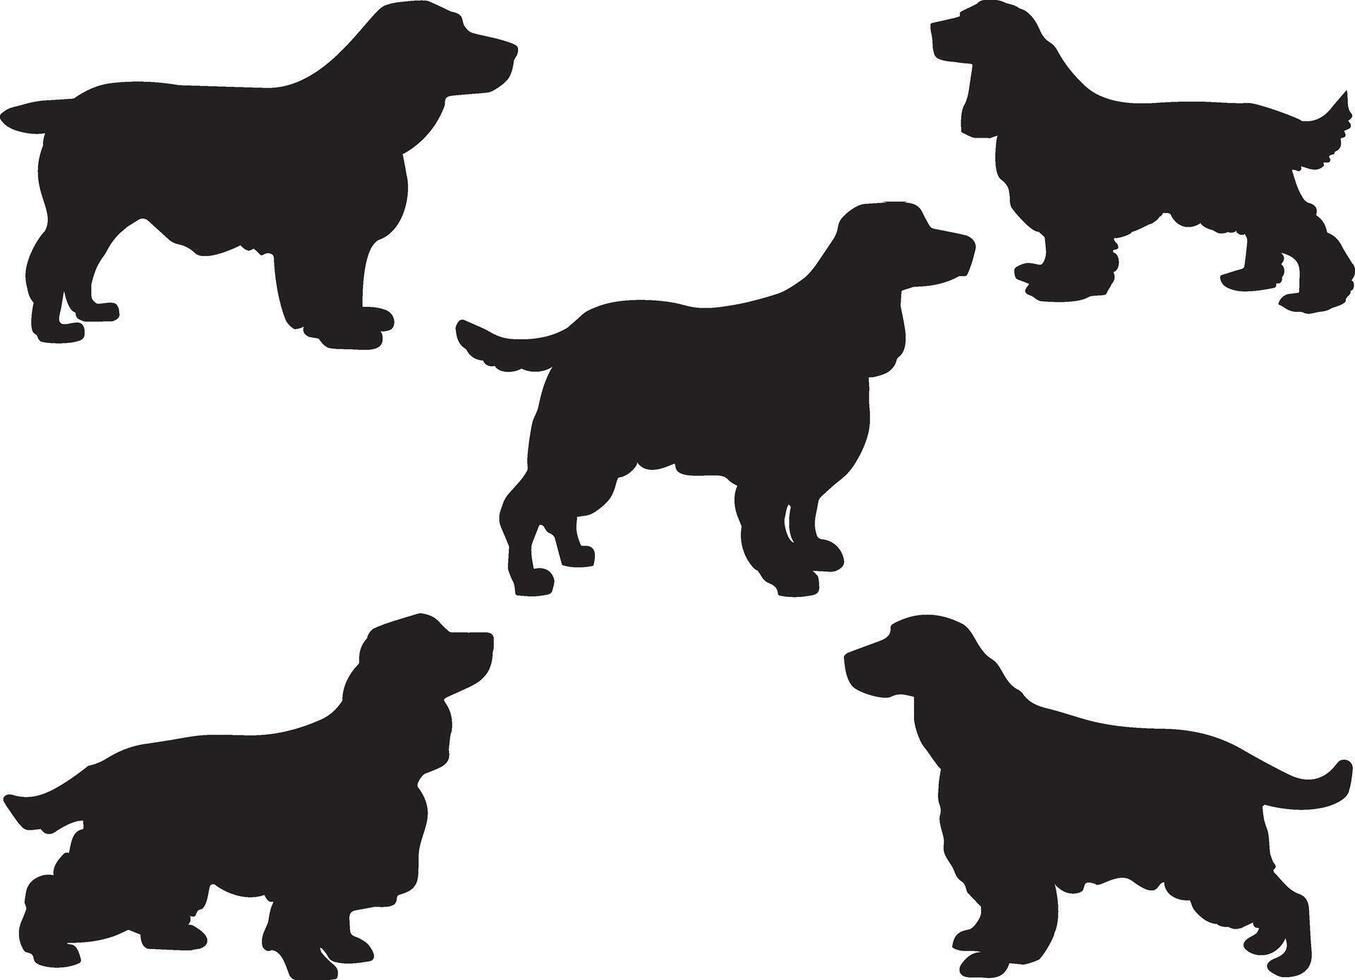 Cocker spaniel dogs silhouette on white background vector